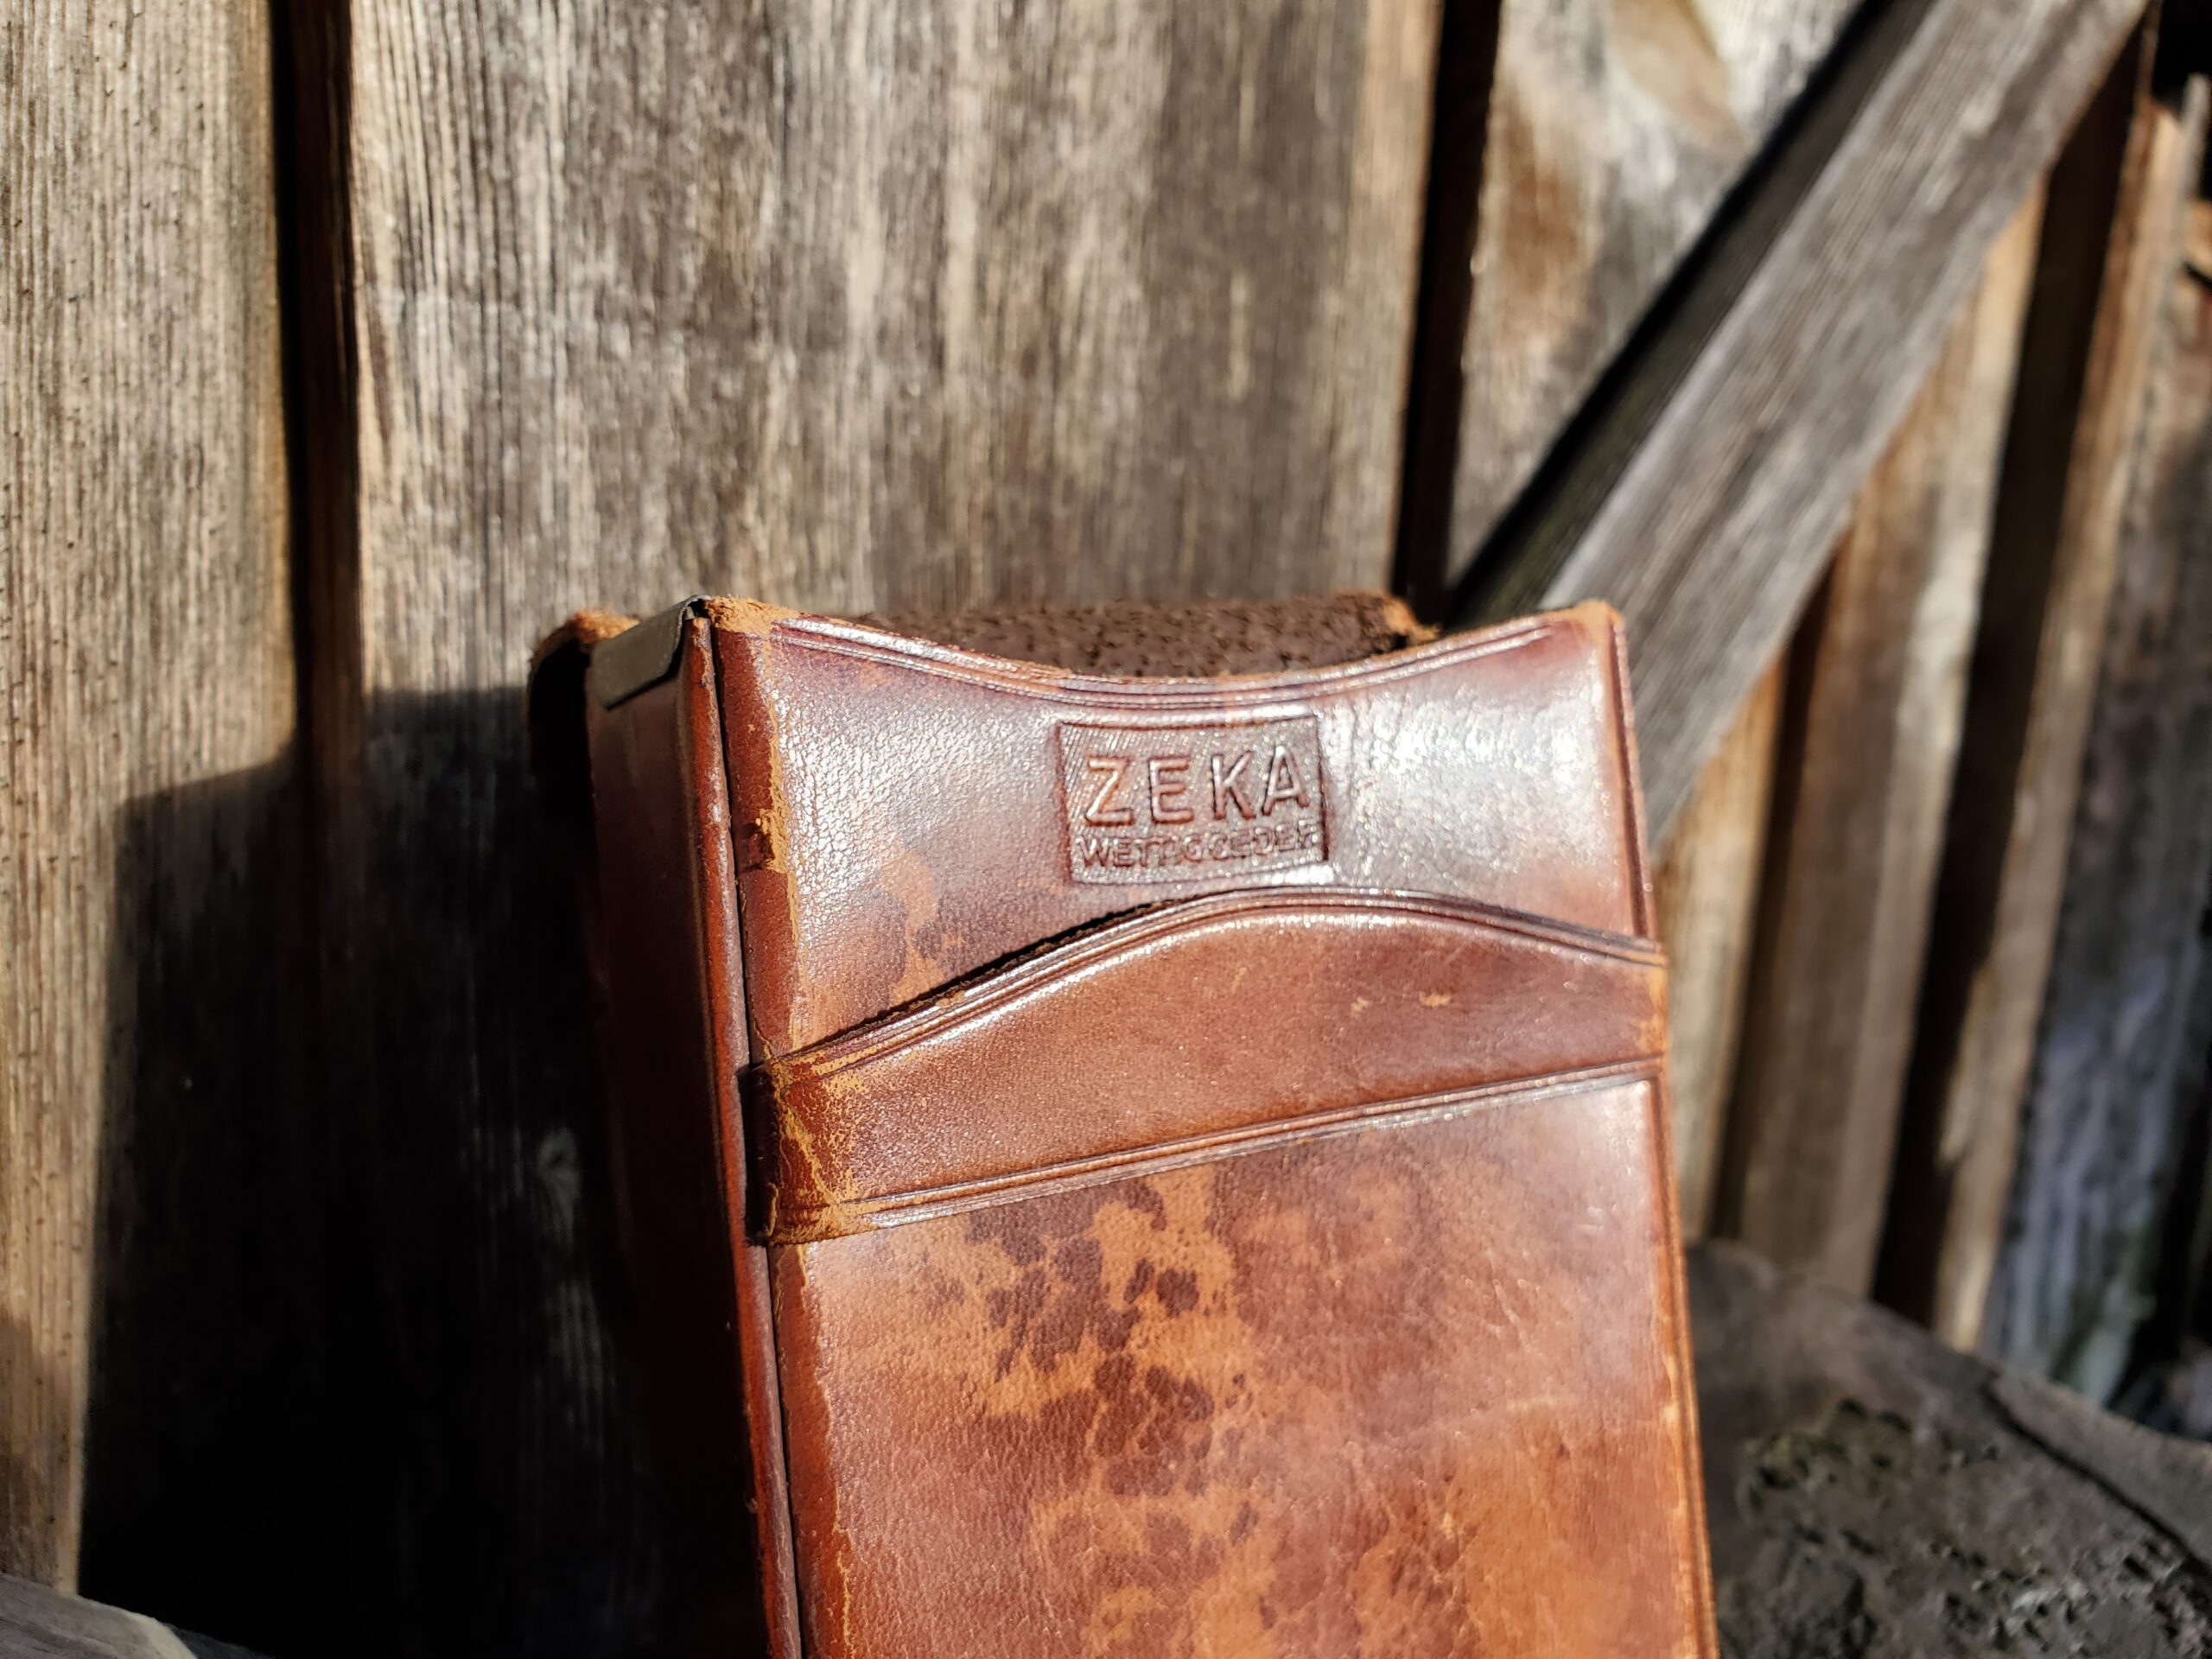 Open flap - Zeka Wettig Geder leather cigarette case (Copyright 2023 G.K. Jakobs)